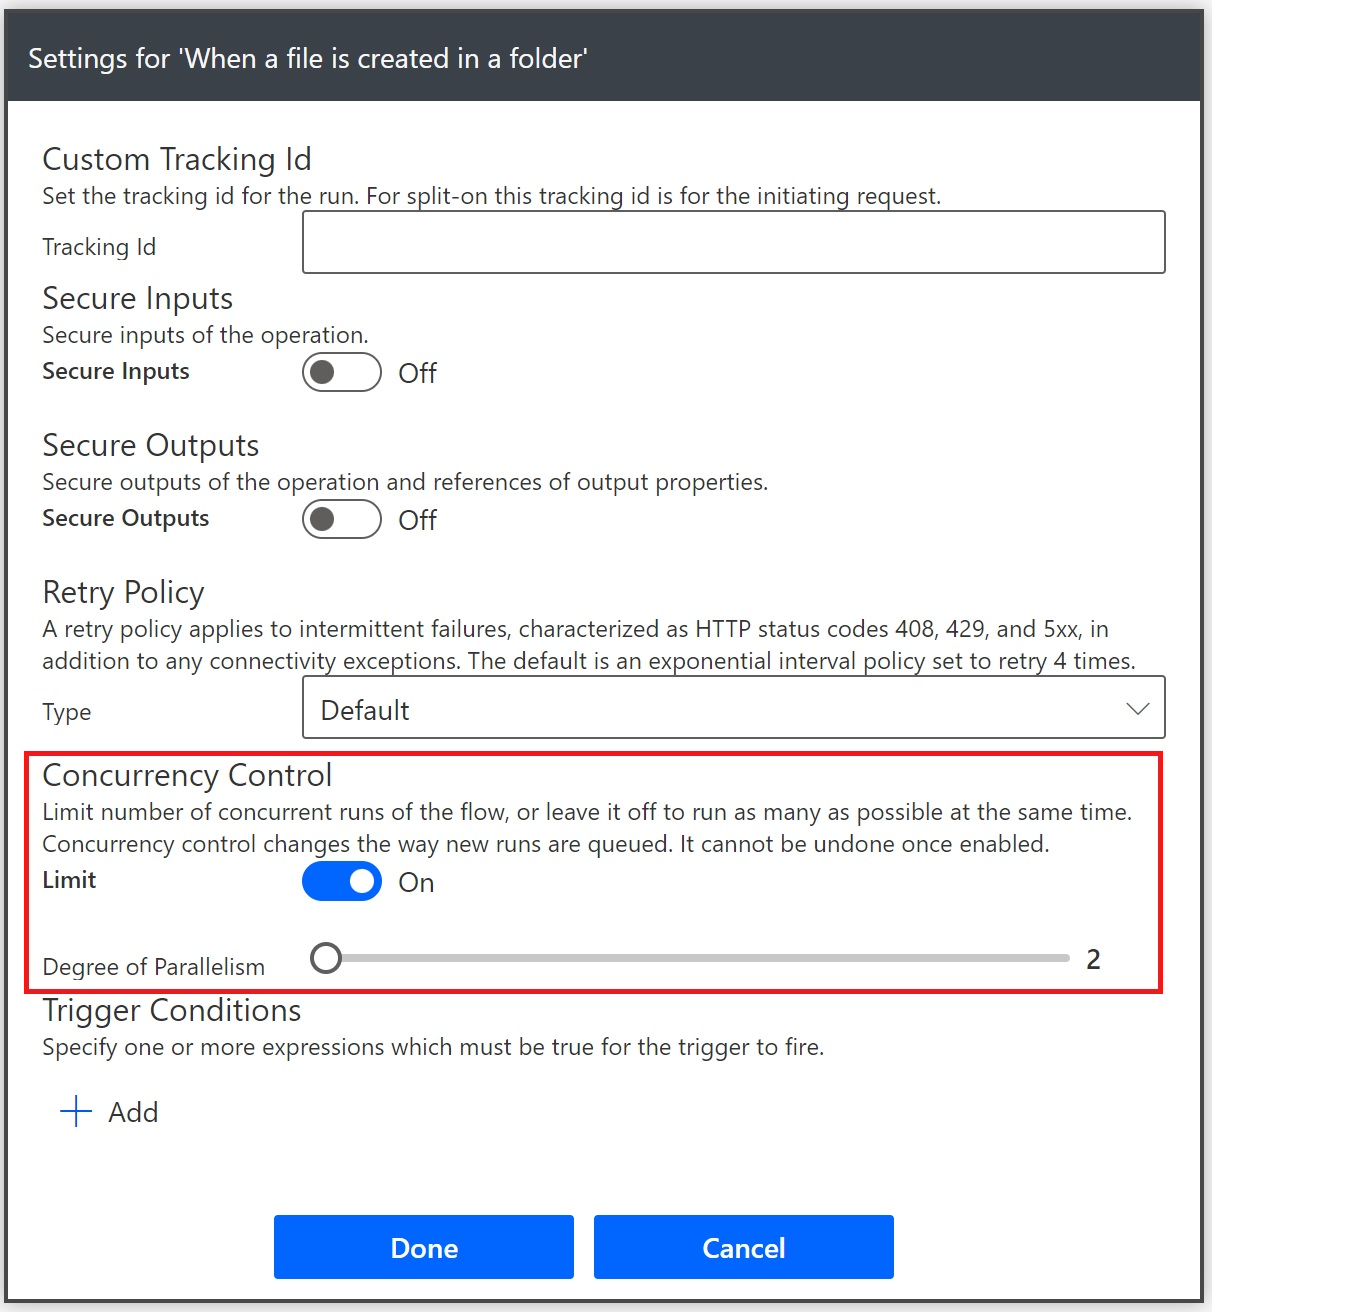 Error 429 Too many Requests integration between  - Microsoft